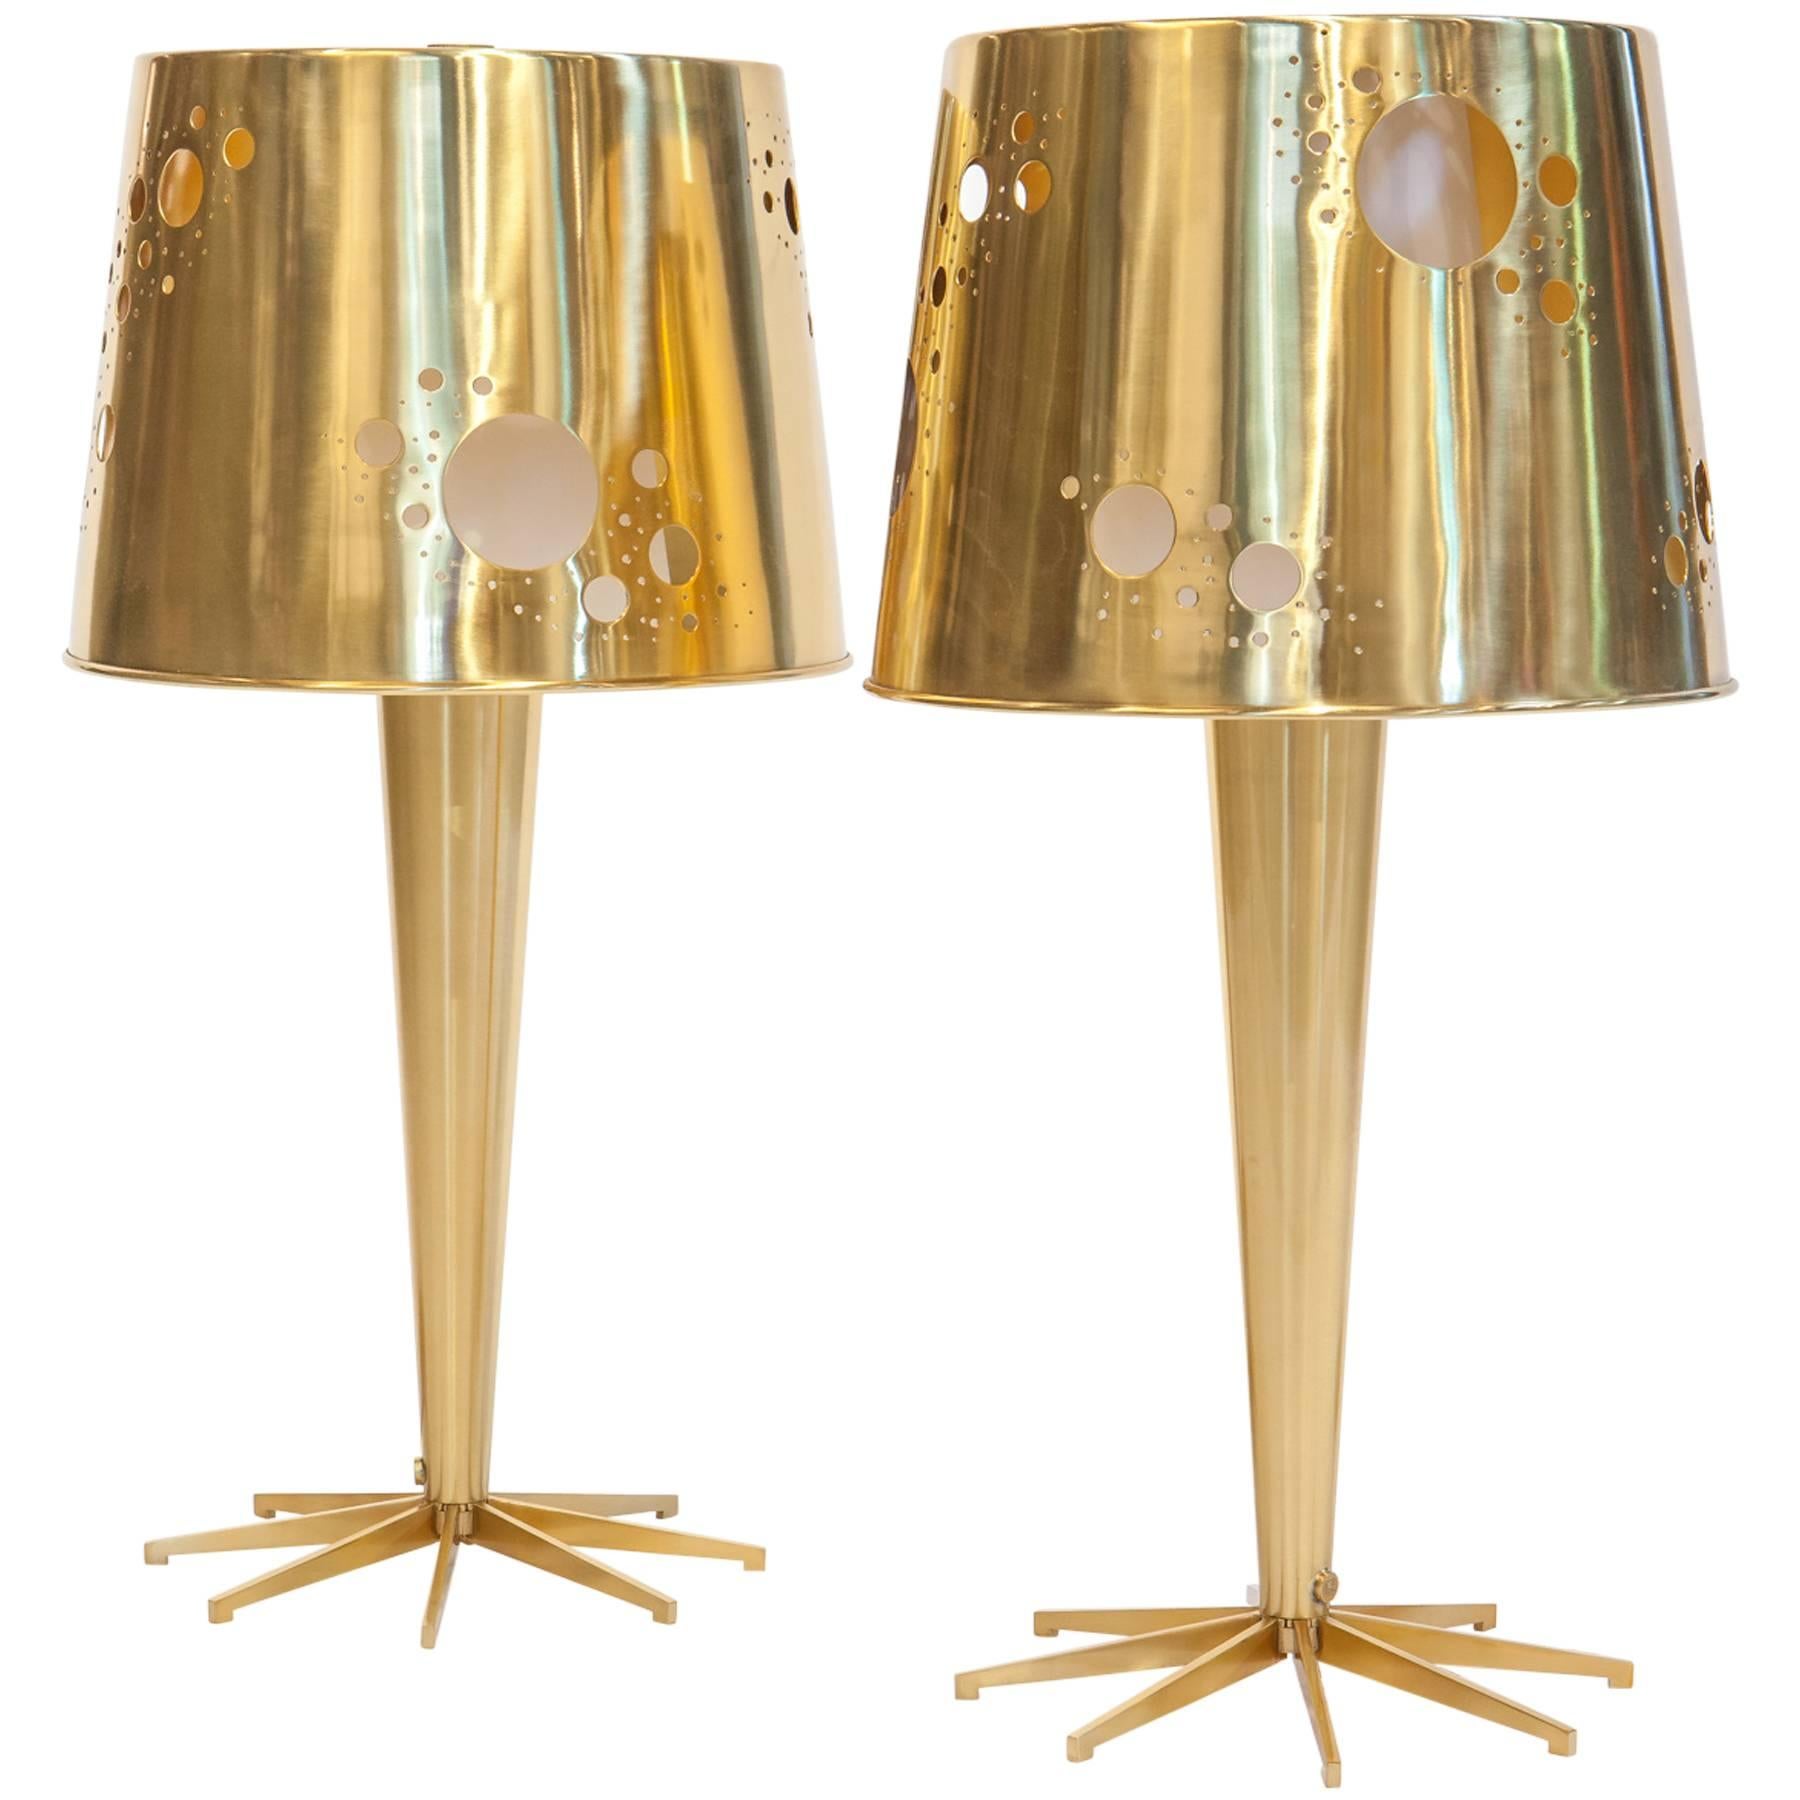 Pair of Roberto Giulio Rida “Lattea” Table Lamps For Sale